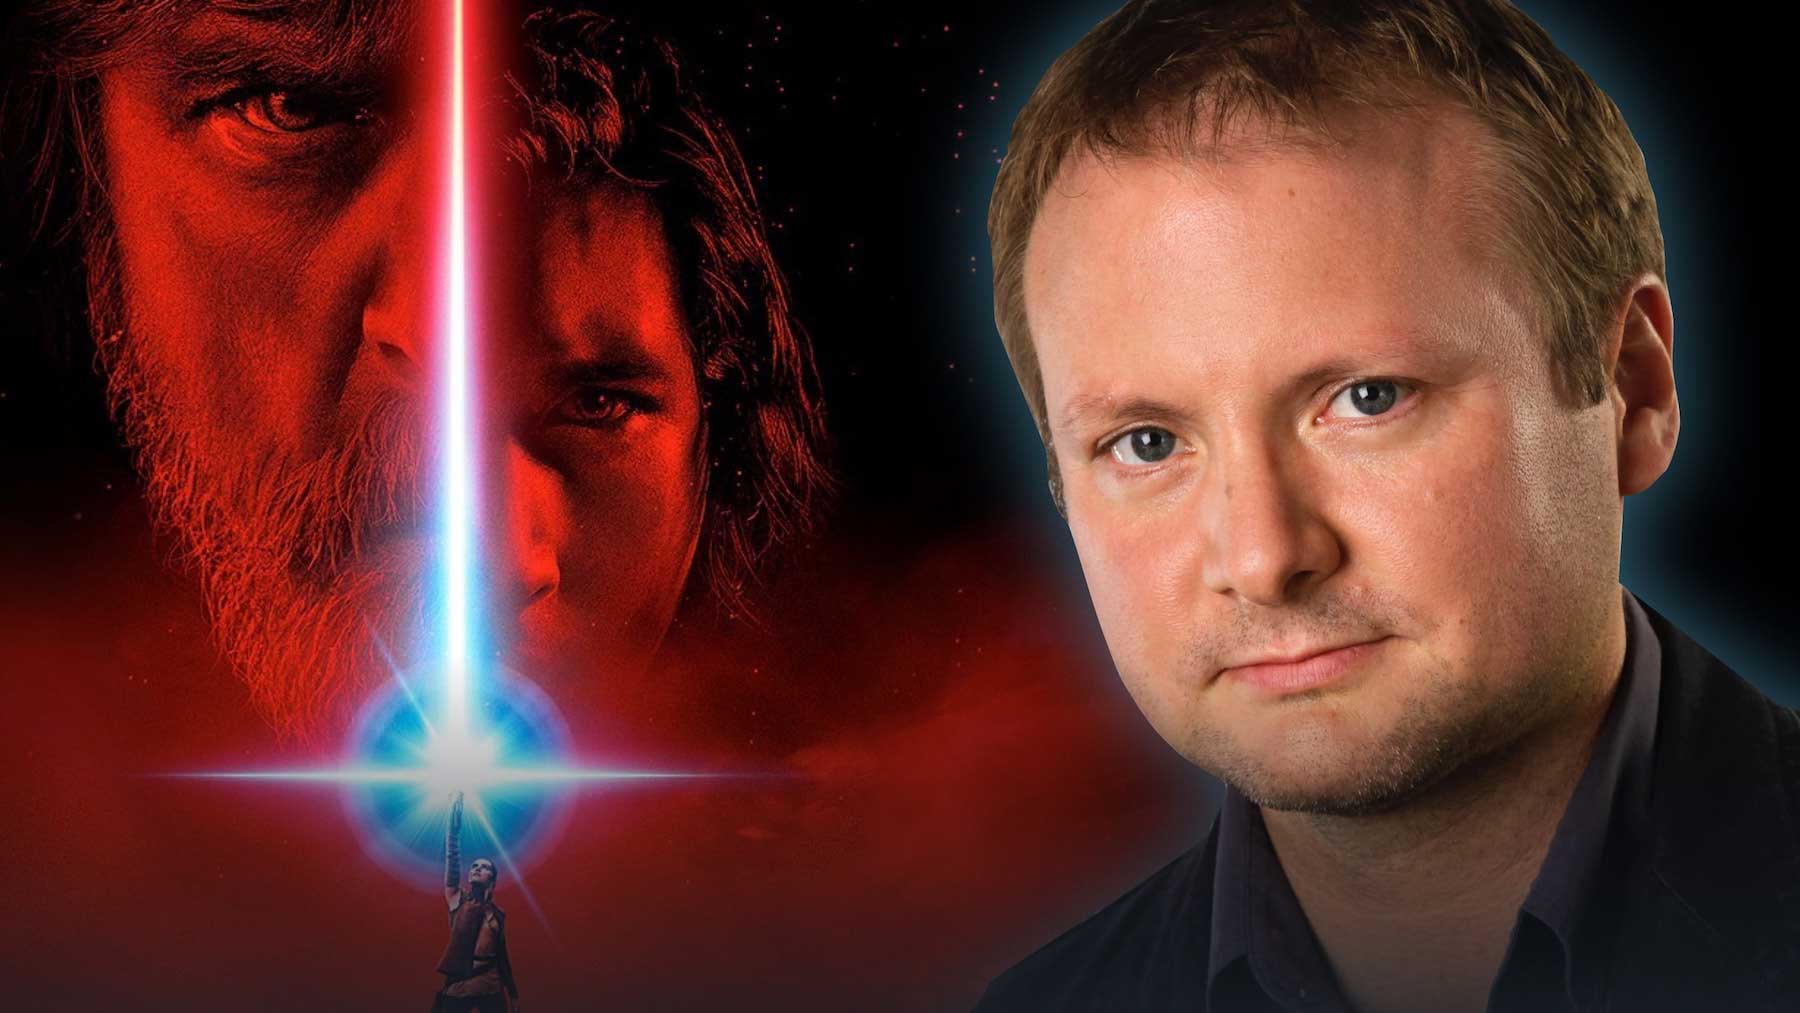 Rian Johnson's Bad Directing Killed The Last Jedi 